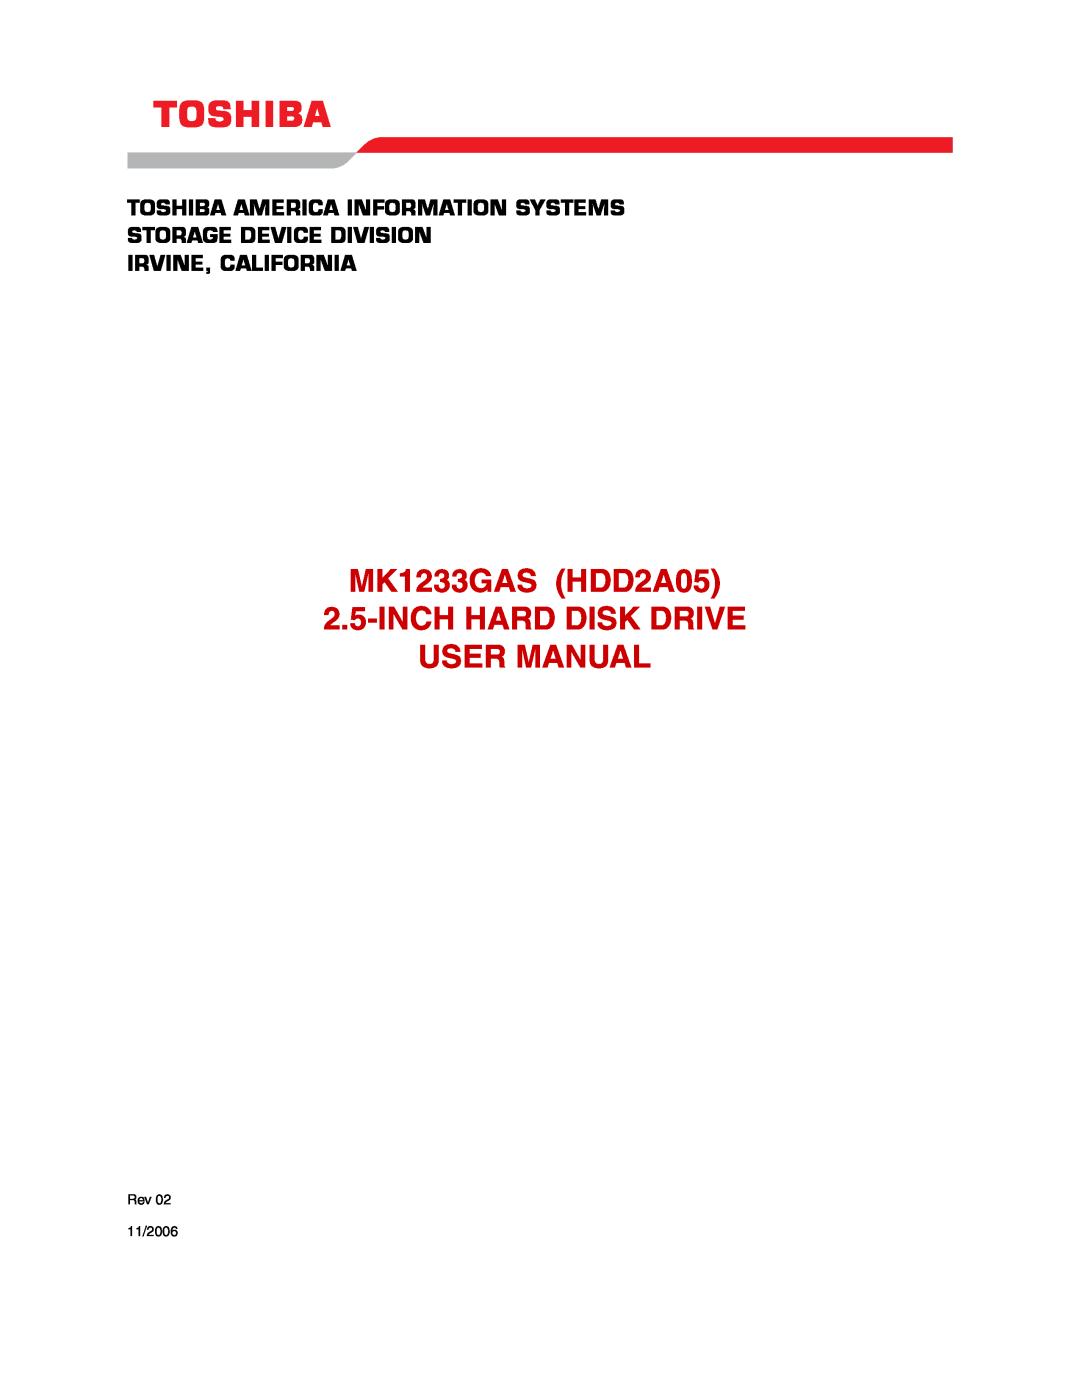 Toshiba user manual MK1233GAS HDD2A05 2.5-INCH HARD DISK DRIVE USER MANUAL, Irvine, California, Rev 11/2006 